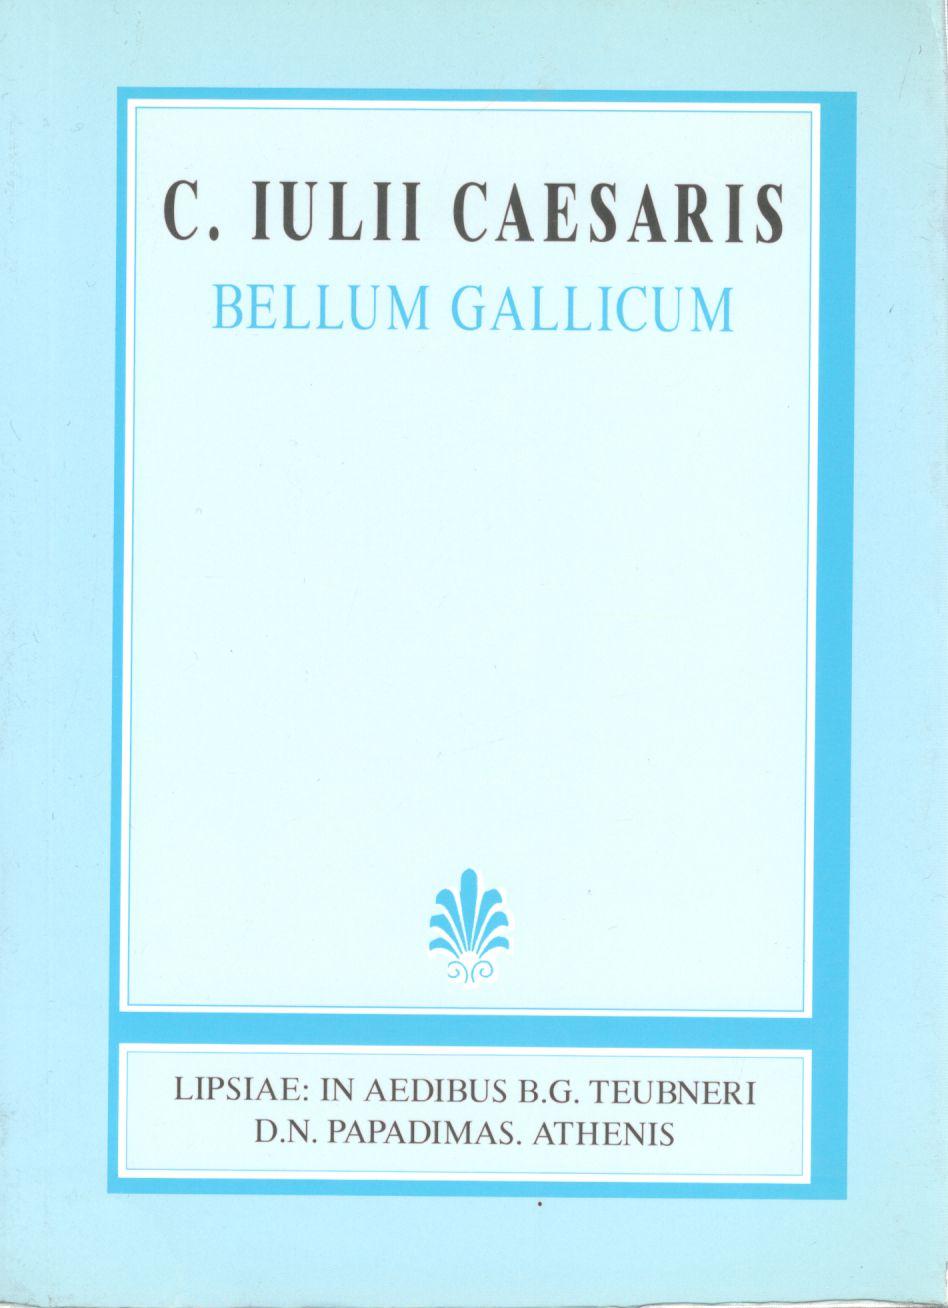 C. Iulii Caesaris, Bellum Gallicum, [Ιουλίου Καίσαρος, Απομνημονεύματα περί του Γαλατικού Πολέμου]